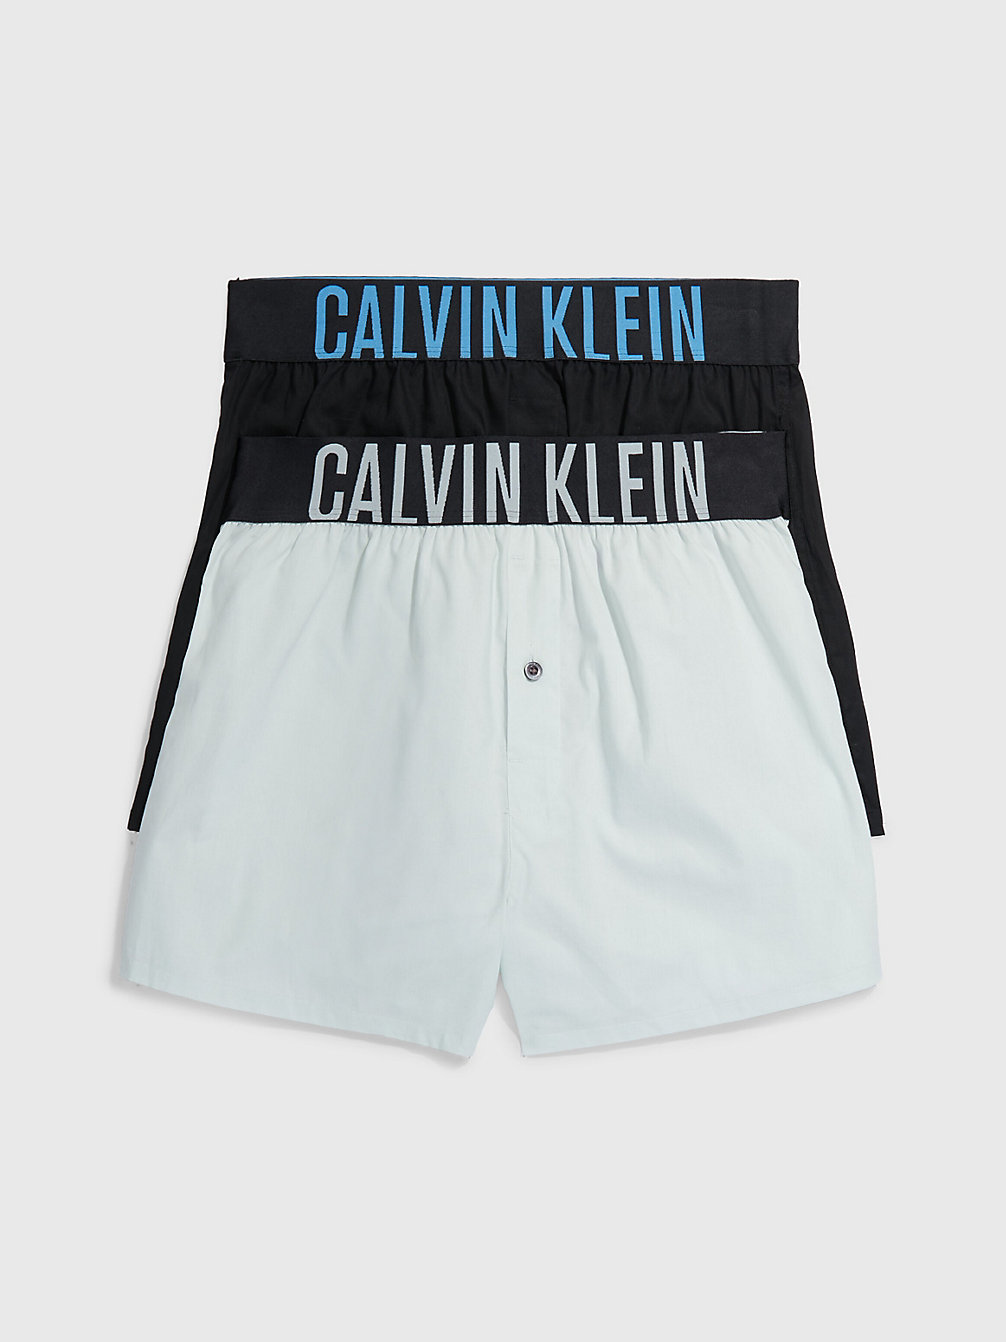 BLACK W/ SIGNATURE BLUE, DRAGON FLY 2 Pack Slim Fit Boxers - Intense Power undefined men Calvin Klein